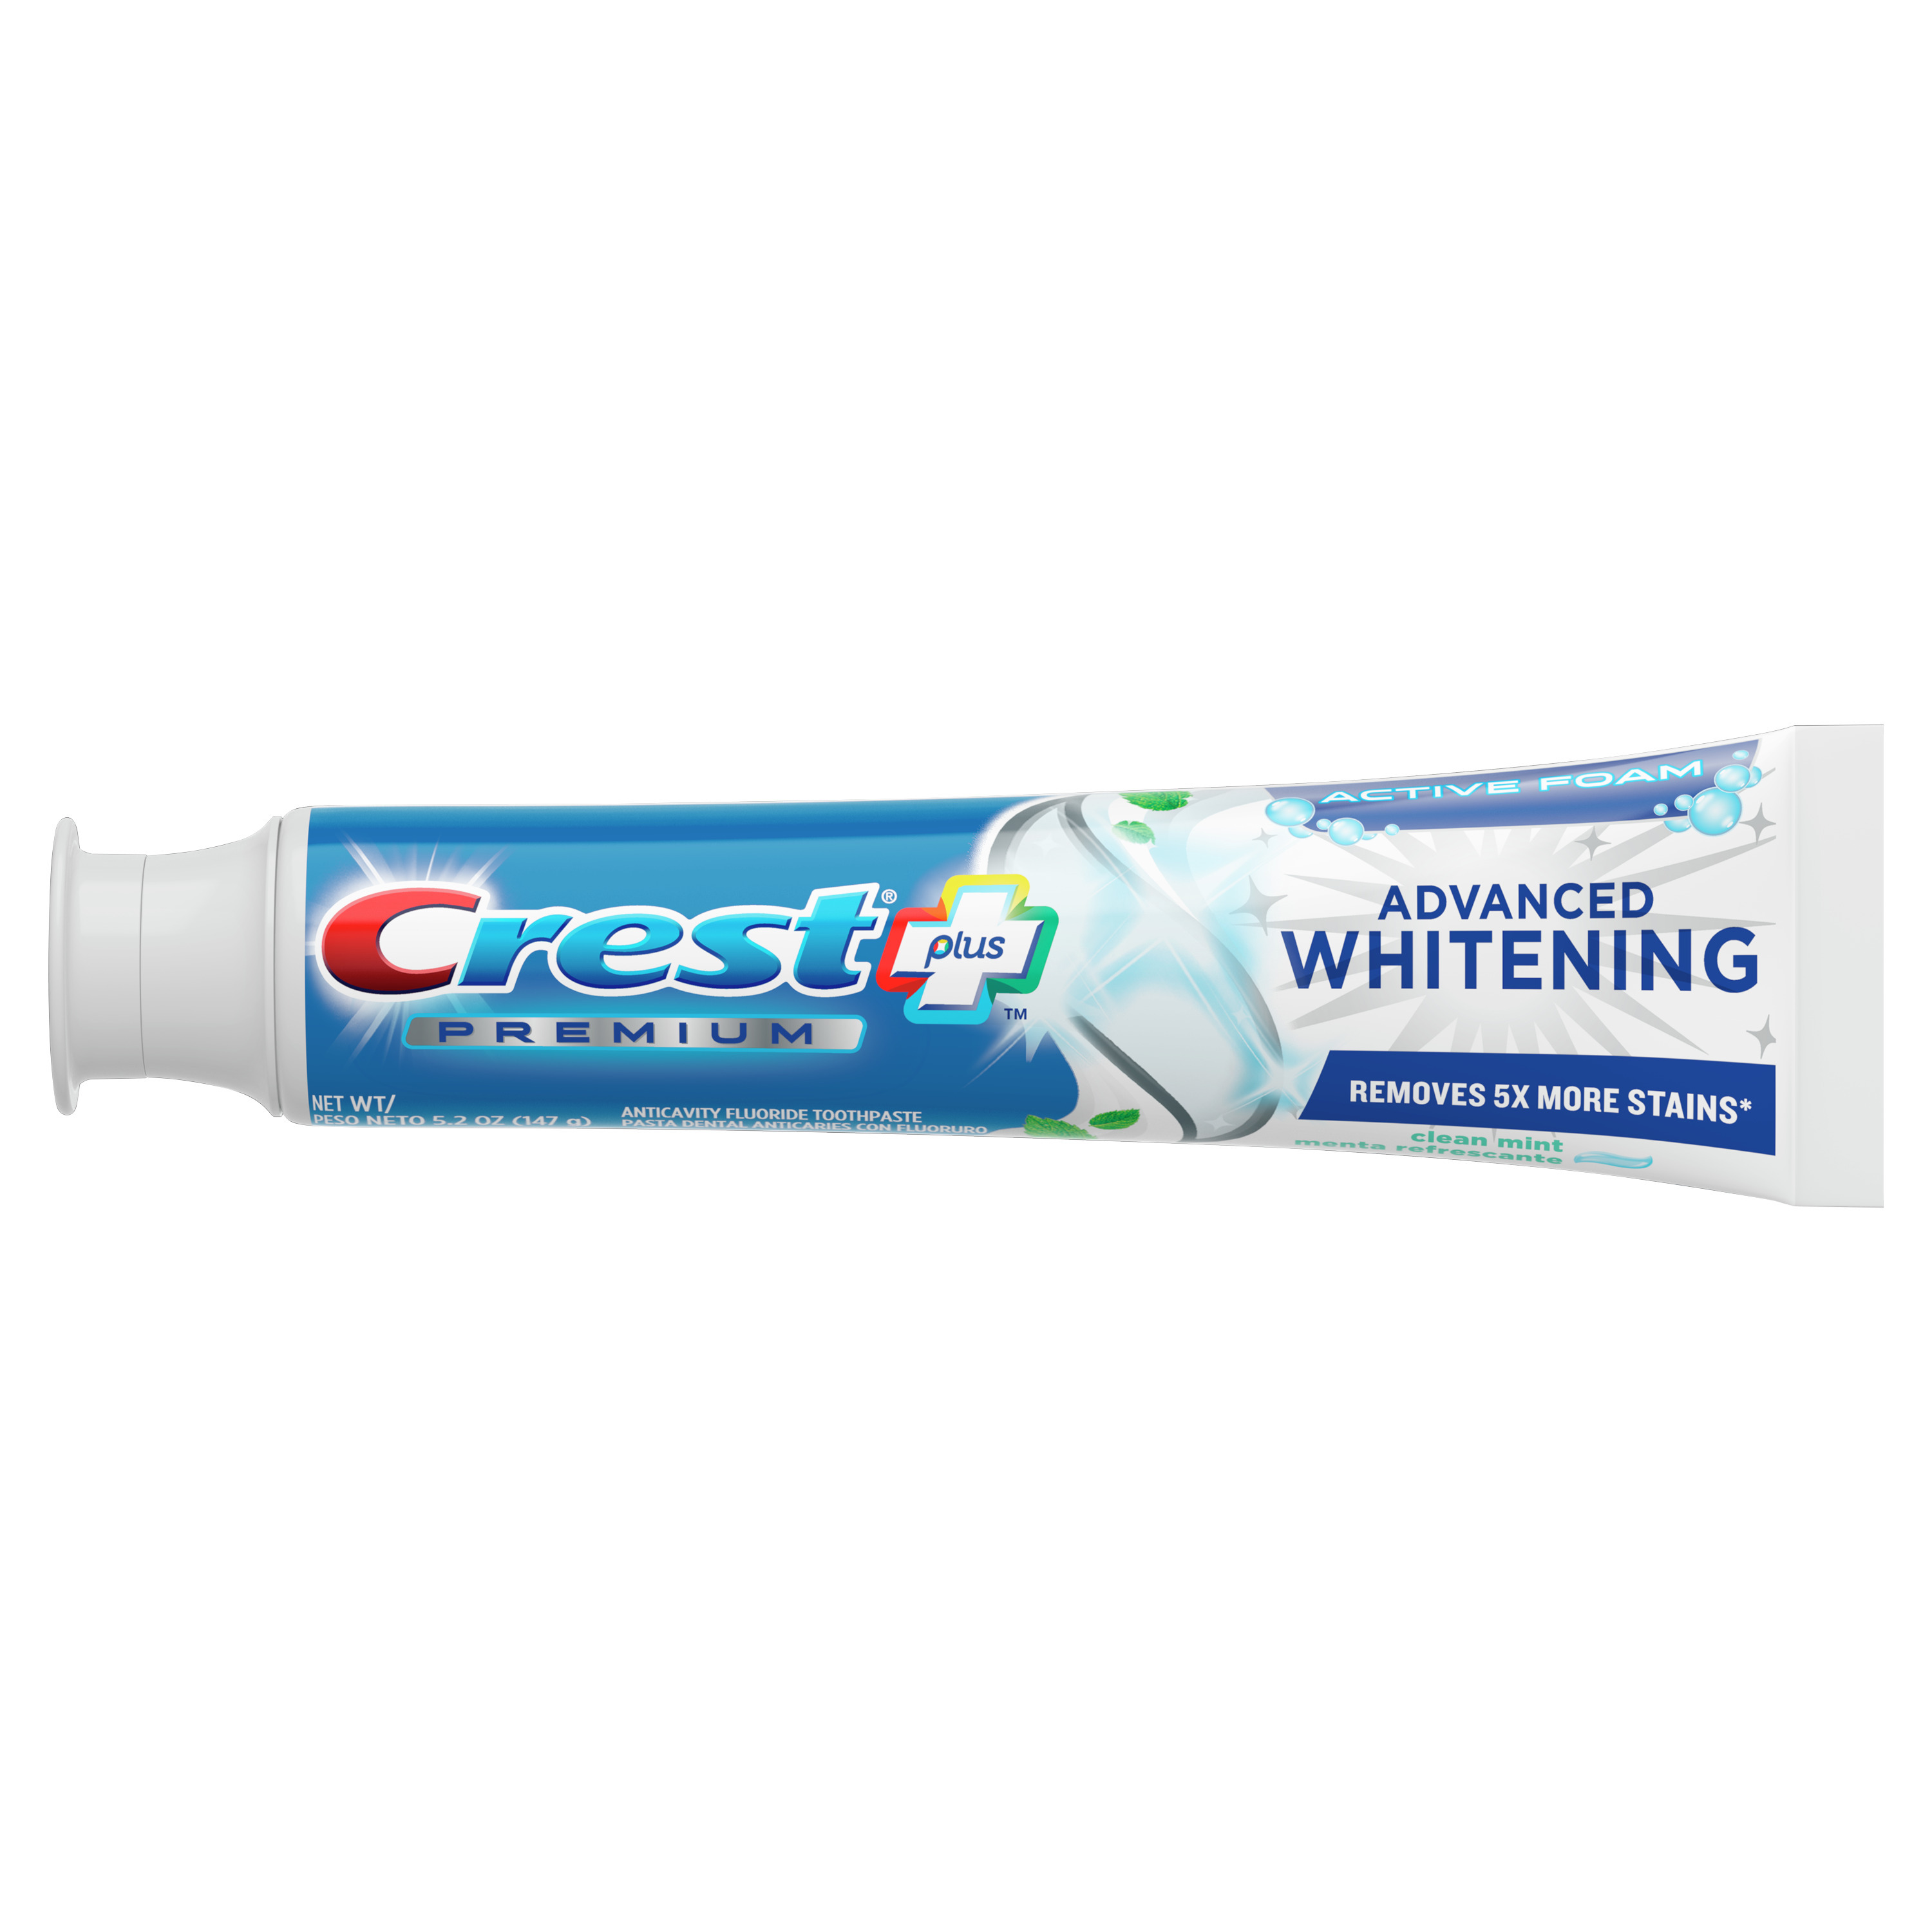 Crest Premium Plus Advanced Whitening Toothpaste, Mint, 5.2 oz, 3 Pk - image 8 of 8